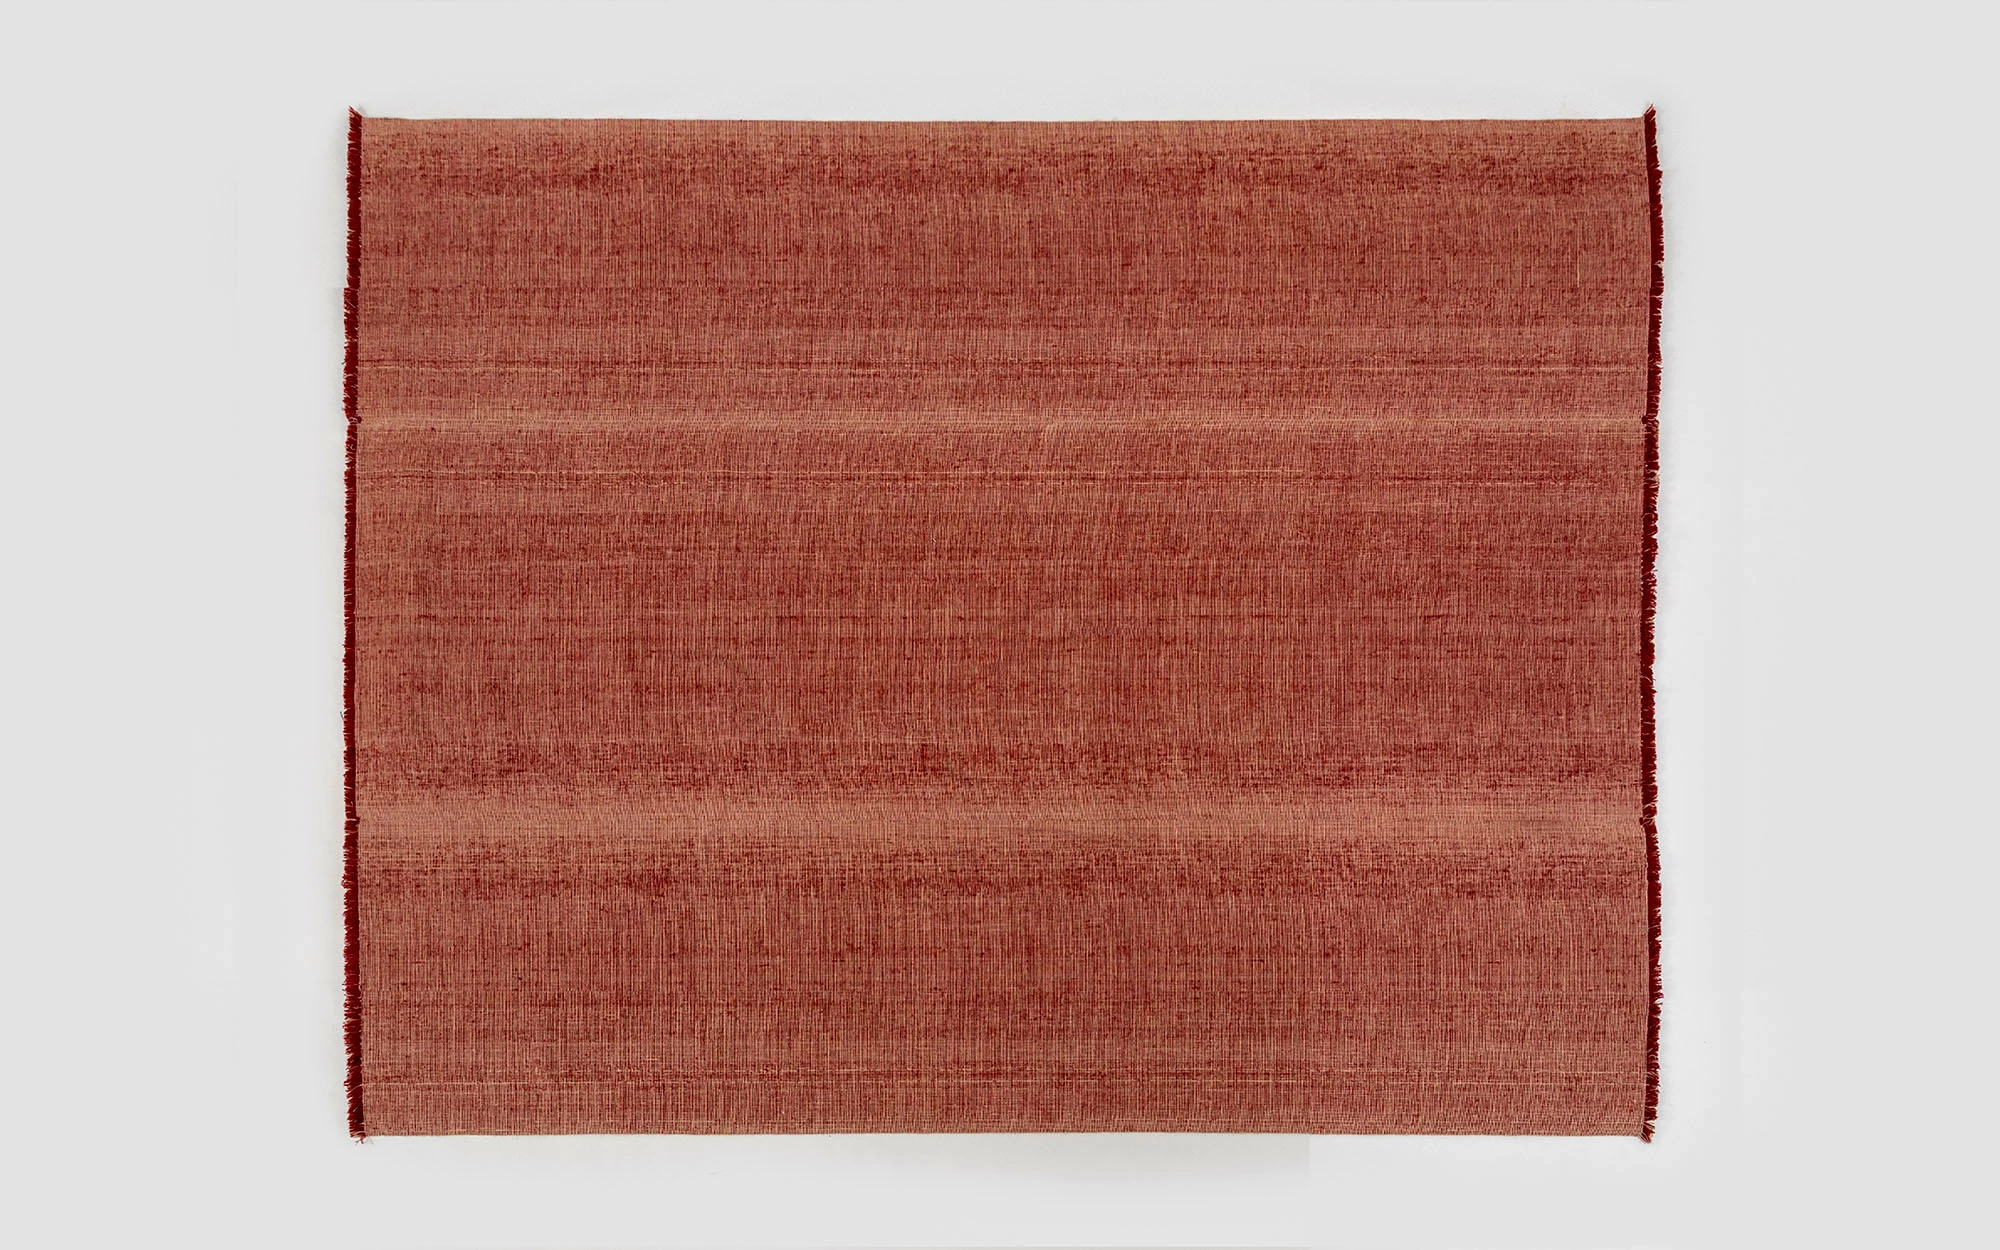 Wilton Carpet S - Ronan & Erwan Bouroullec - Shelf - Galerie kreo